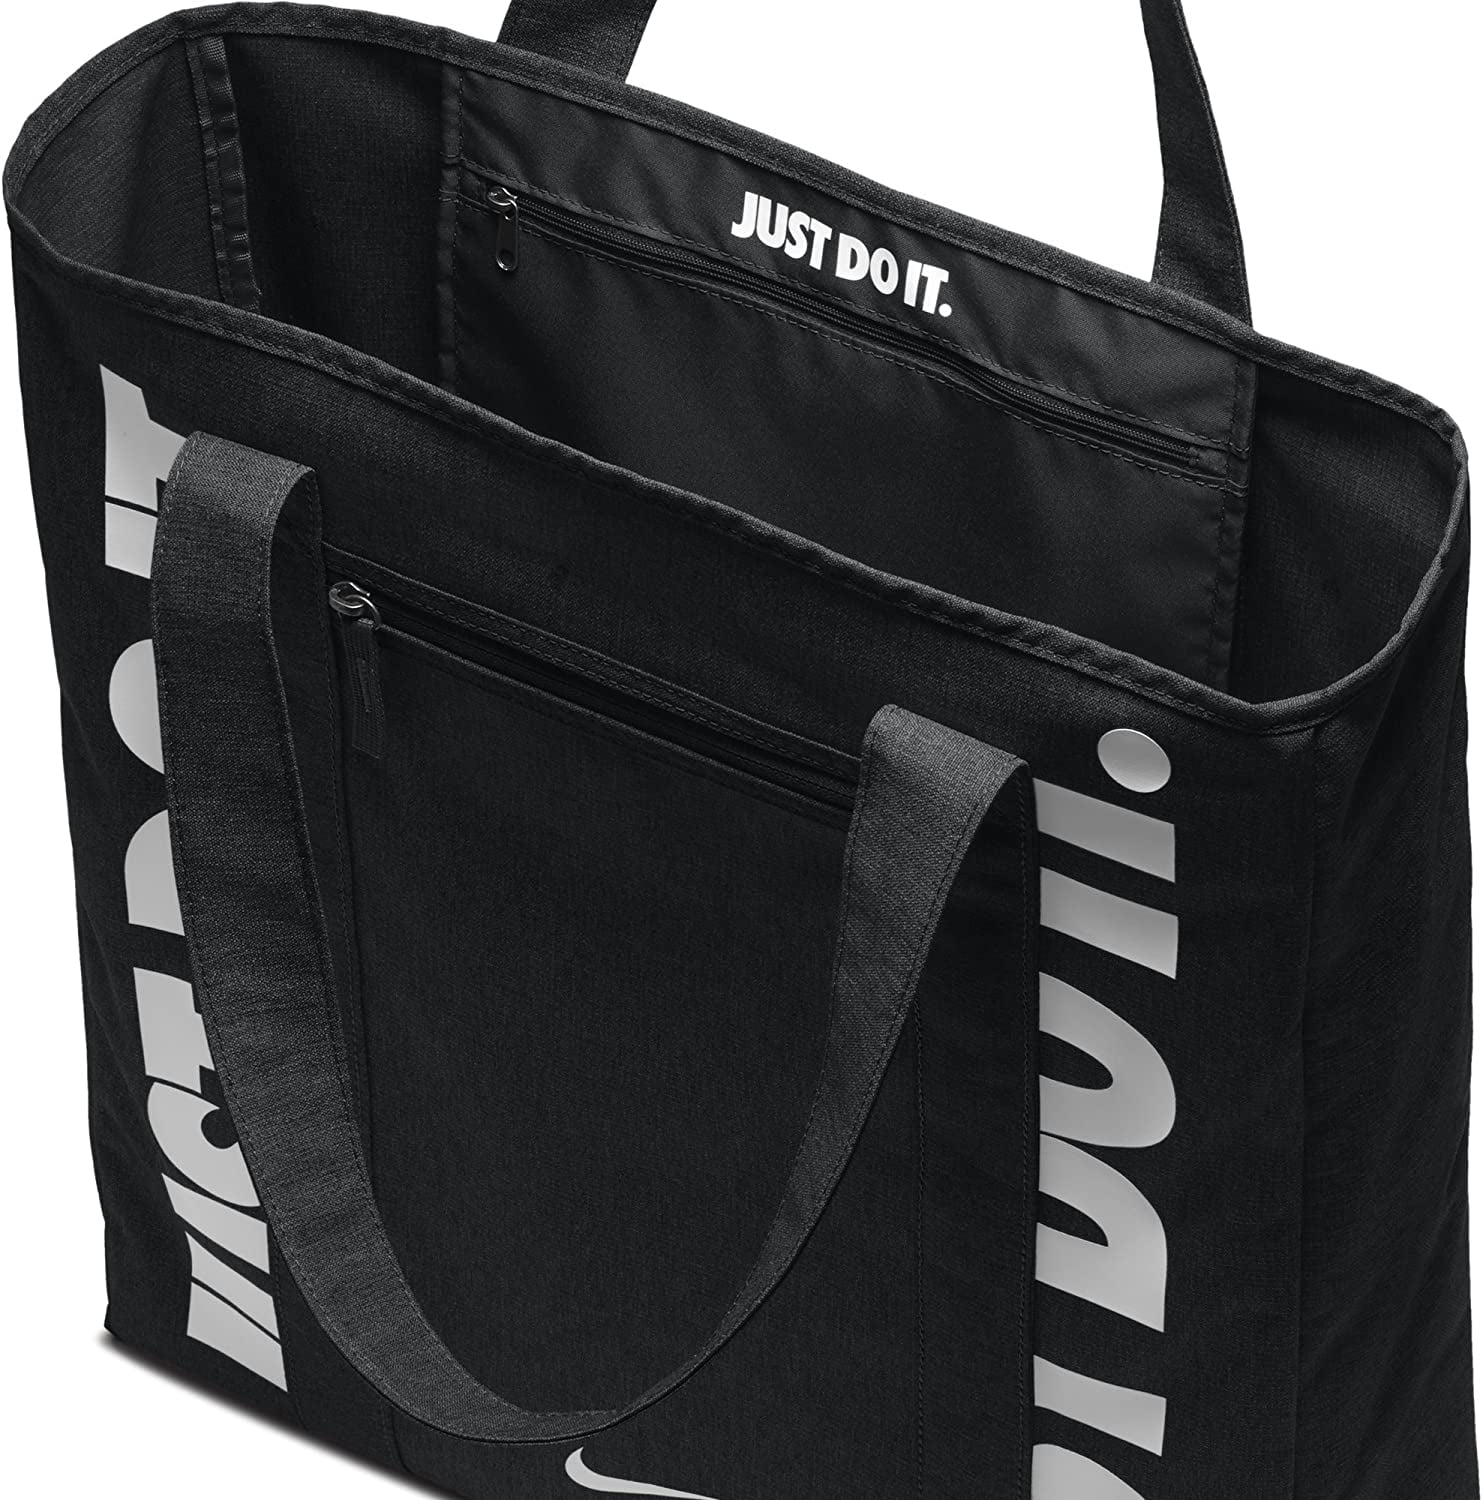 NIKE Gym Women's Training Tote Bag, Black/Black/White, One Size 